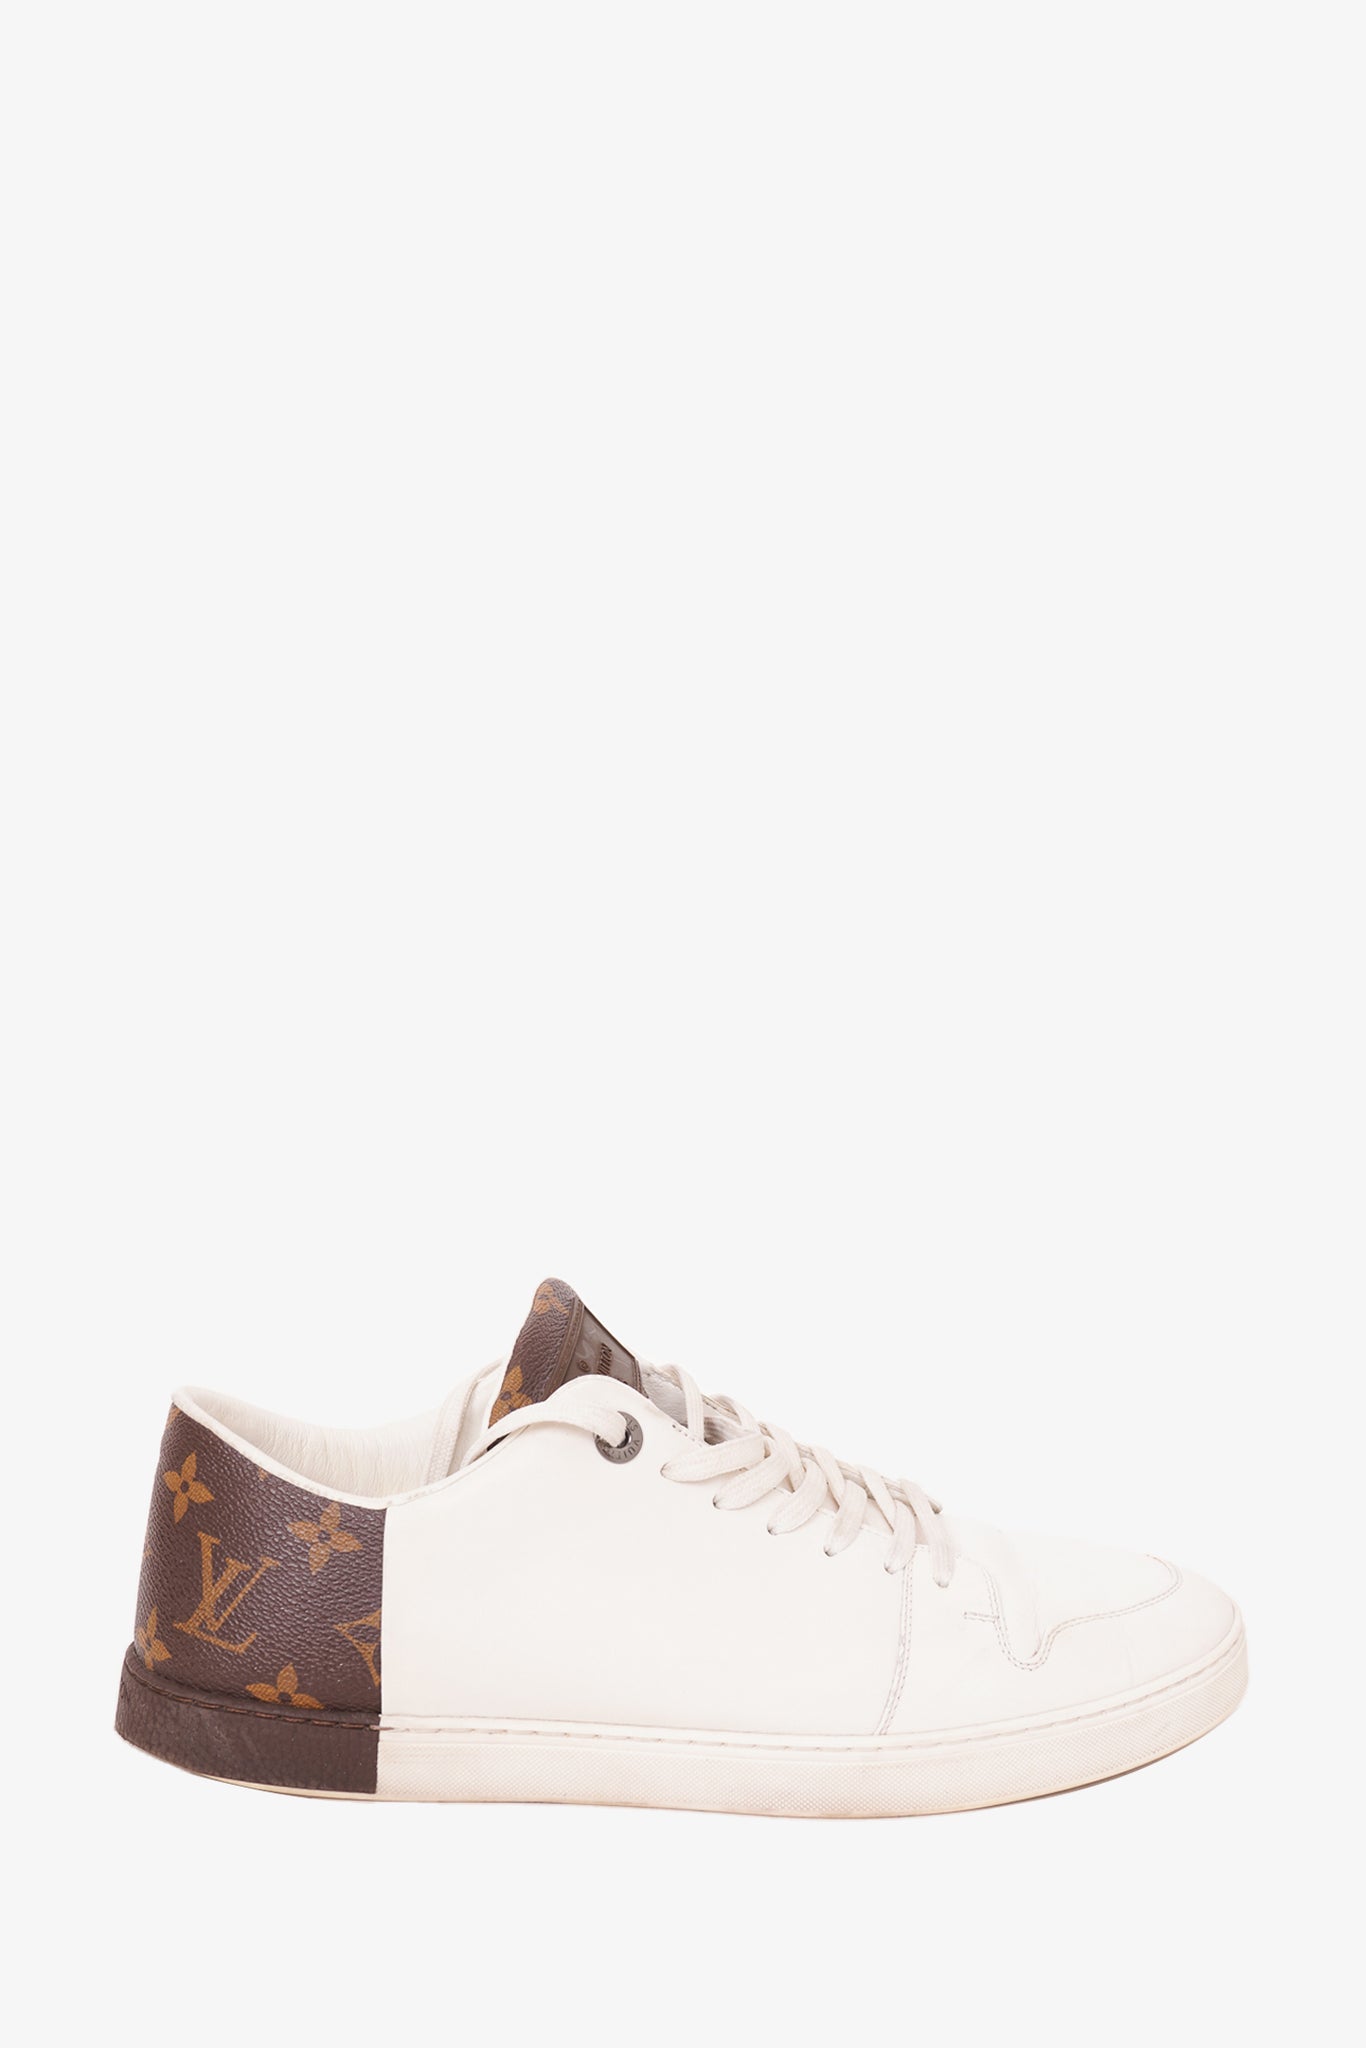 LOUIS VUITTON Run Away Sneakers Damier Azur Suede Size 36/1.2 Pink